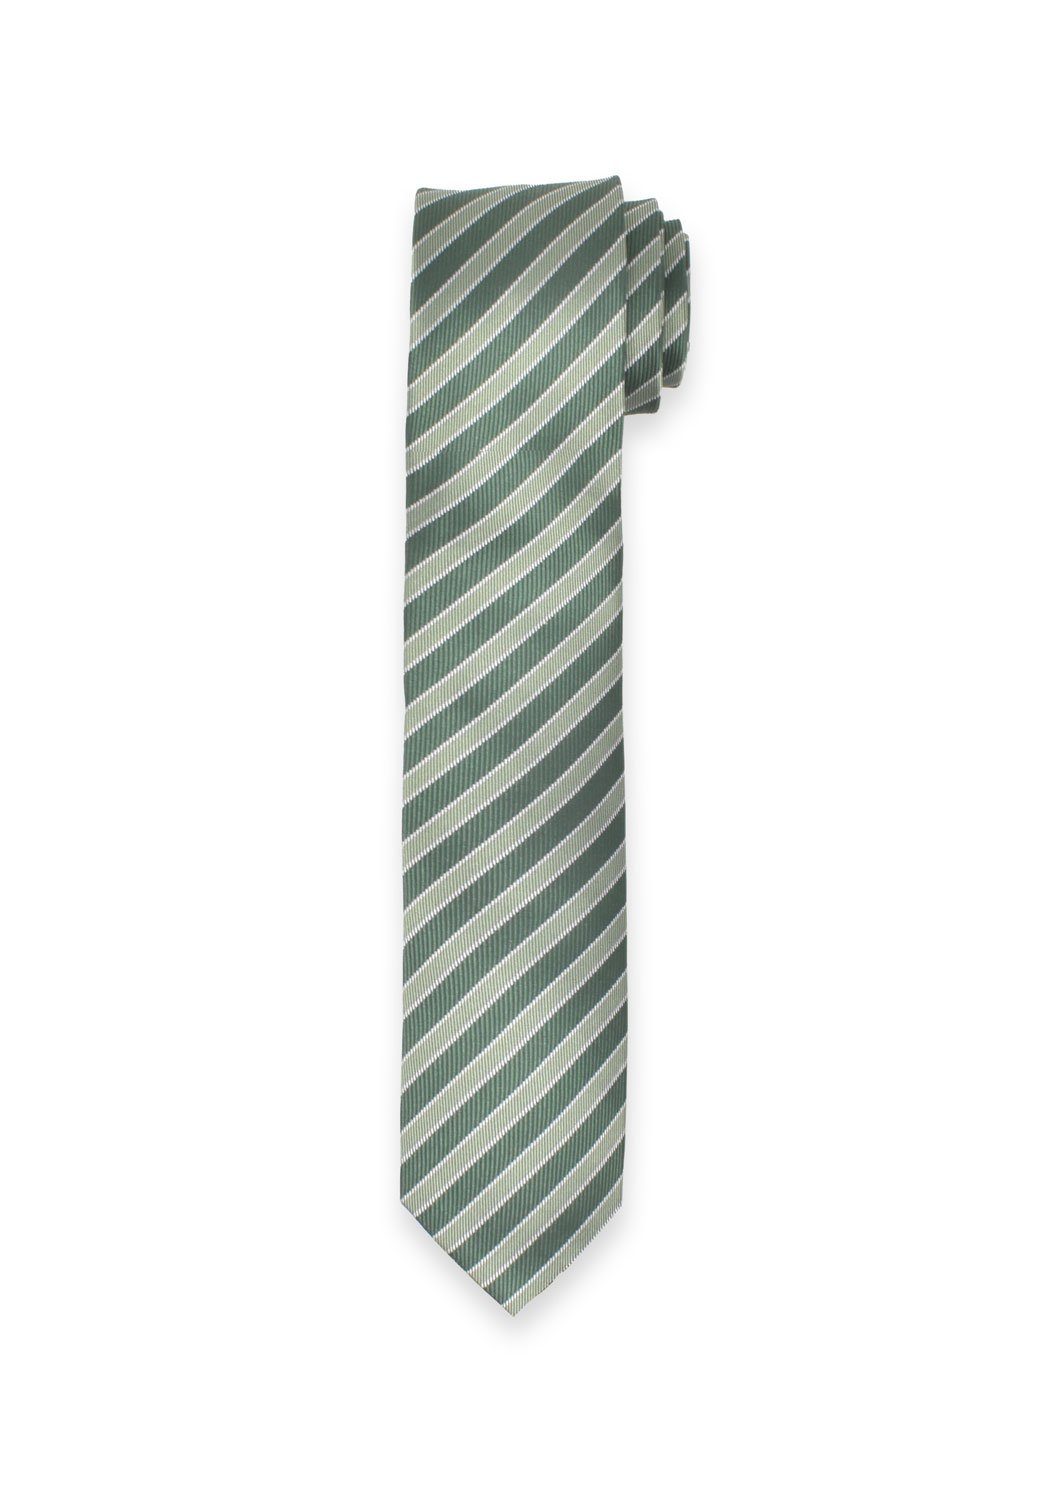 cm Hellgrün/Dunkelgrün - Gestreift 6,5 - Krawatte Krawatte - MARVELIS